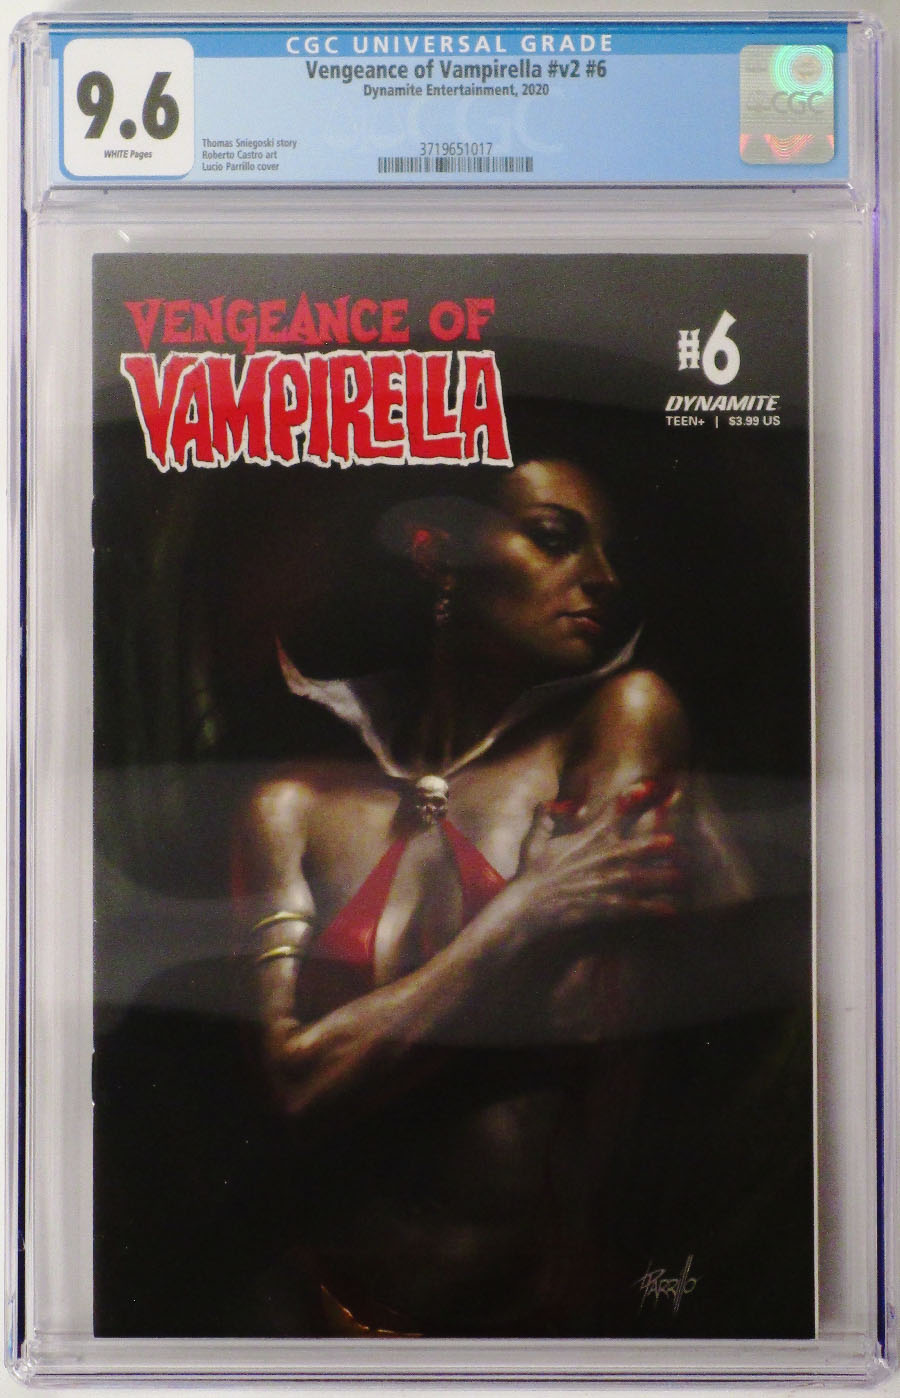 Vengeance Of Vampirella Vol 2 #6 Cover S Regular Lucio Parrillo Cover CGC Graded 9.6